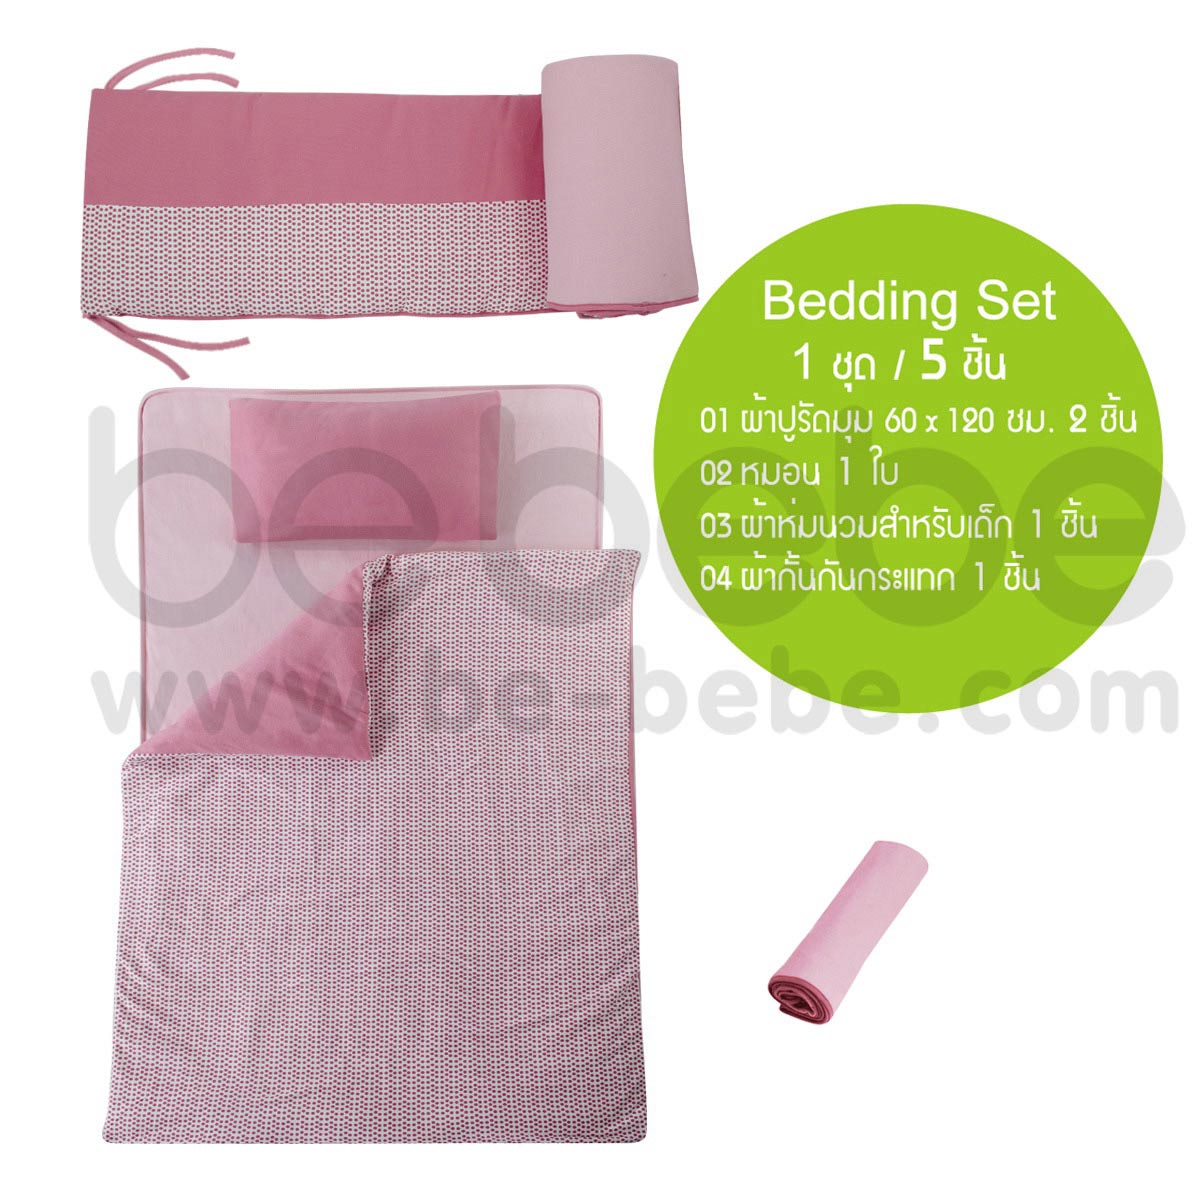 be bebe:Bedding Set 60x120 (5 Pcs.)/Pink